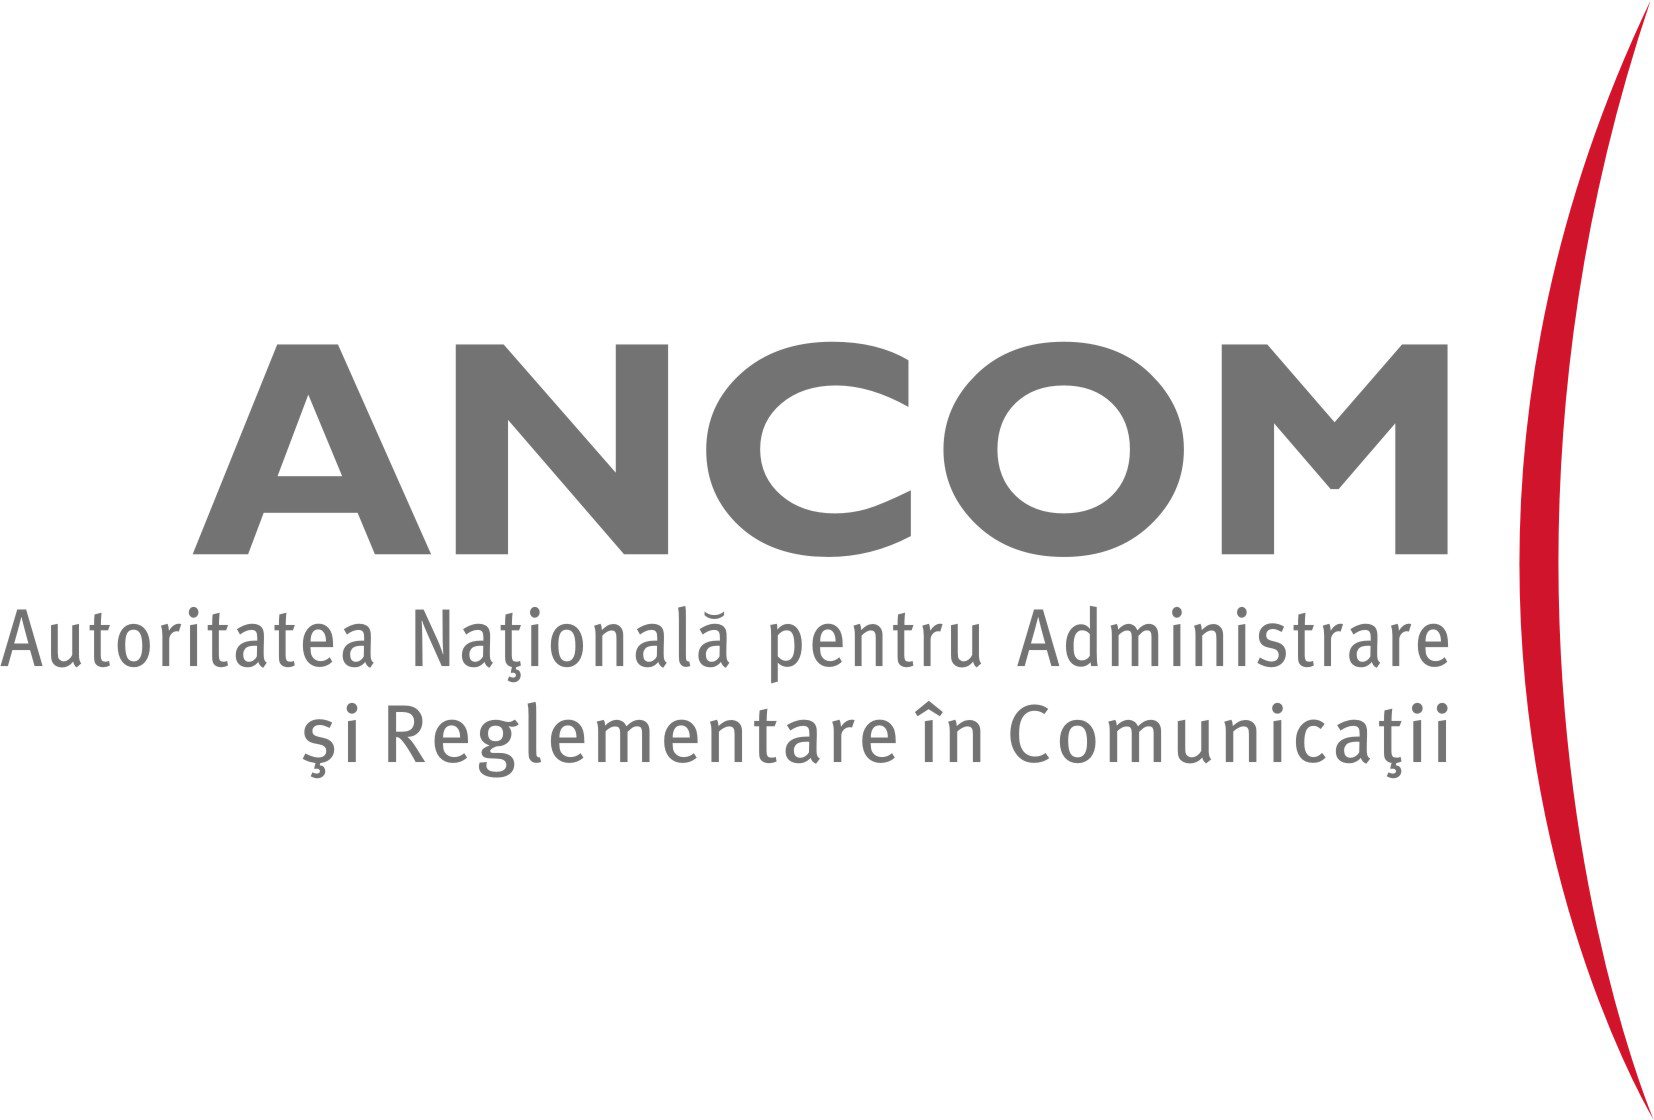 The image shows the ANCOM logoRomania